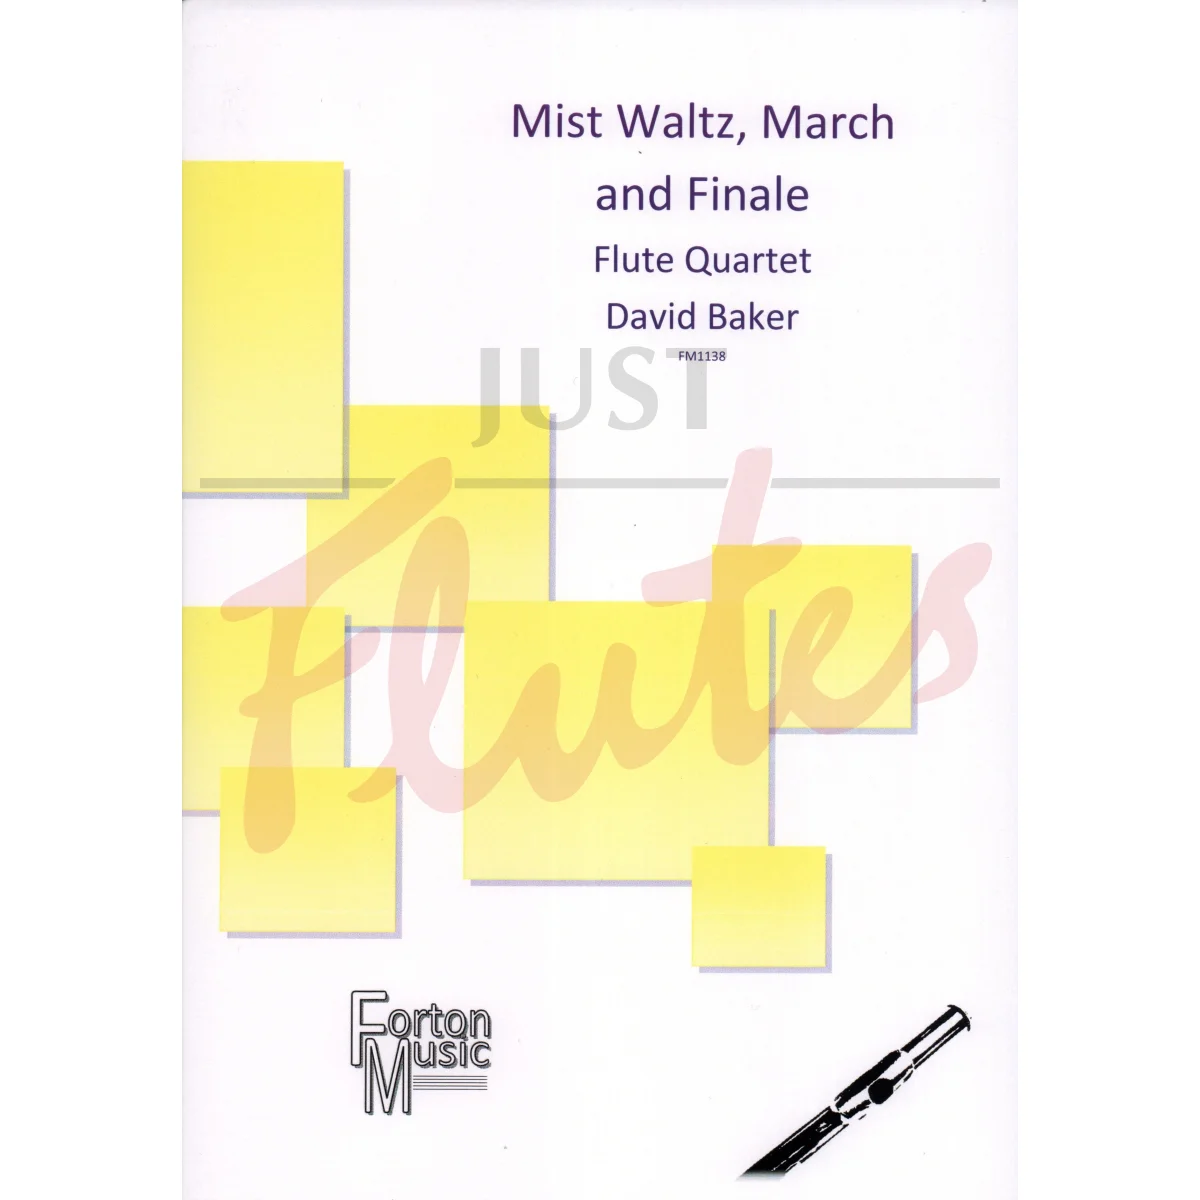 Mist Waltz, March and Finale for Mixed Flute Quartet